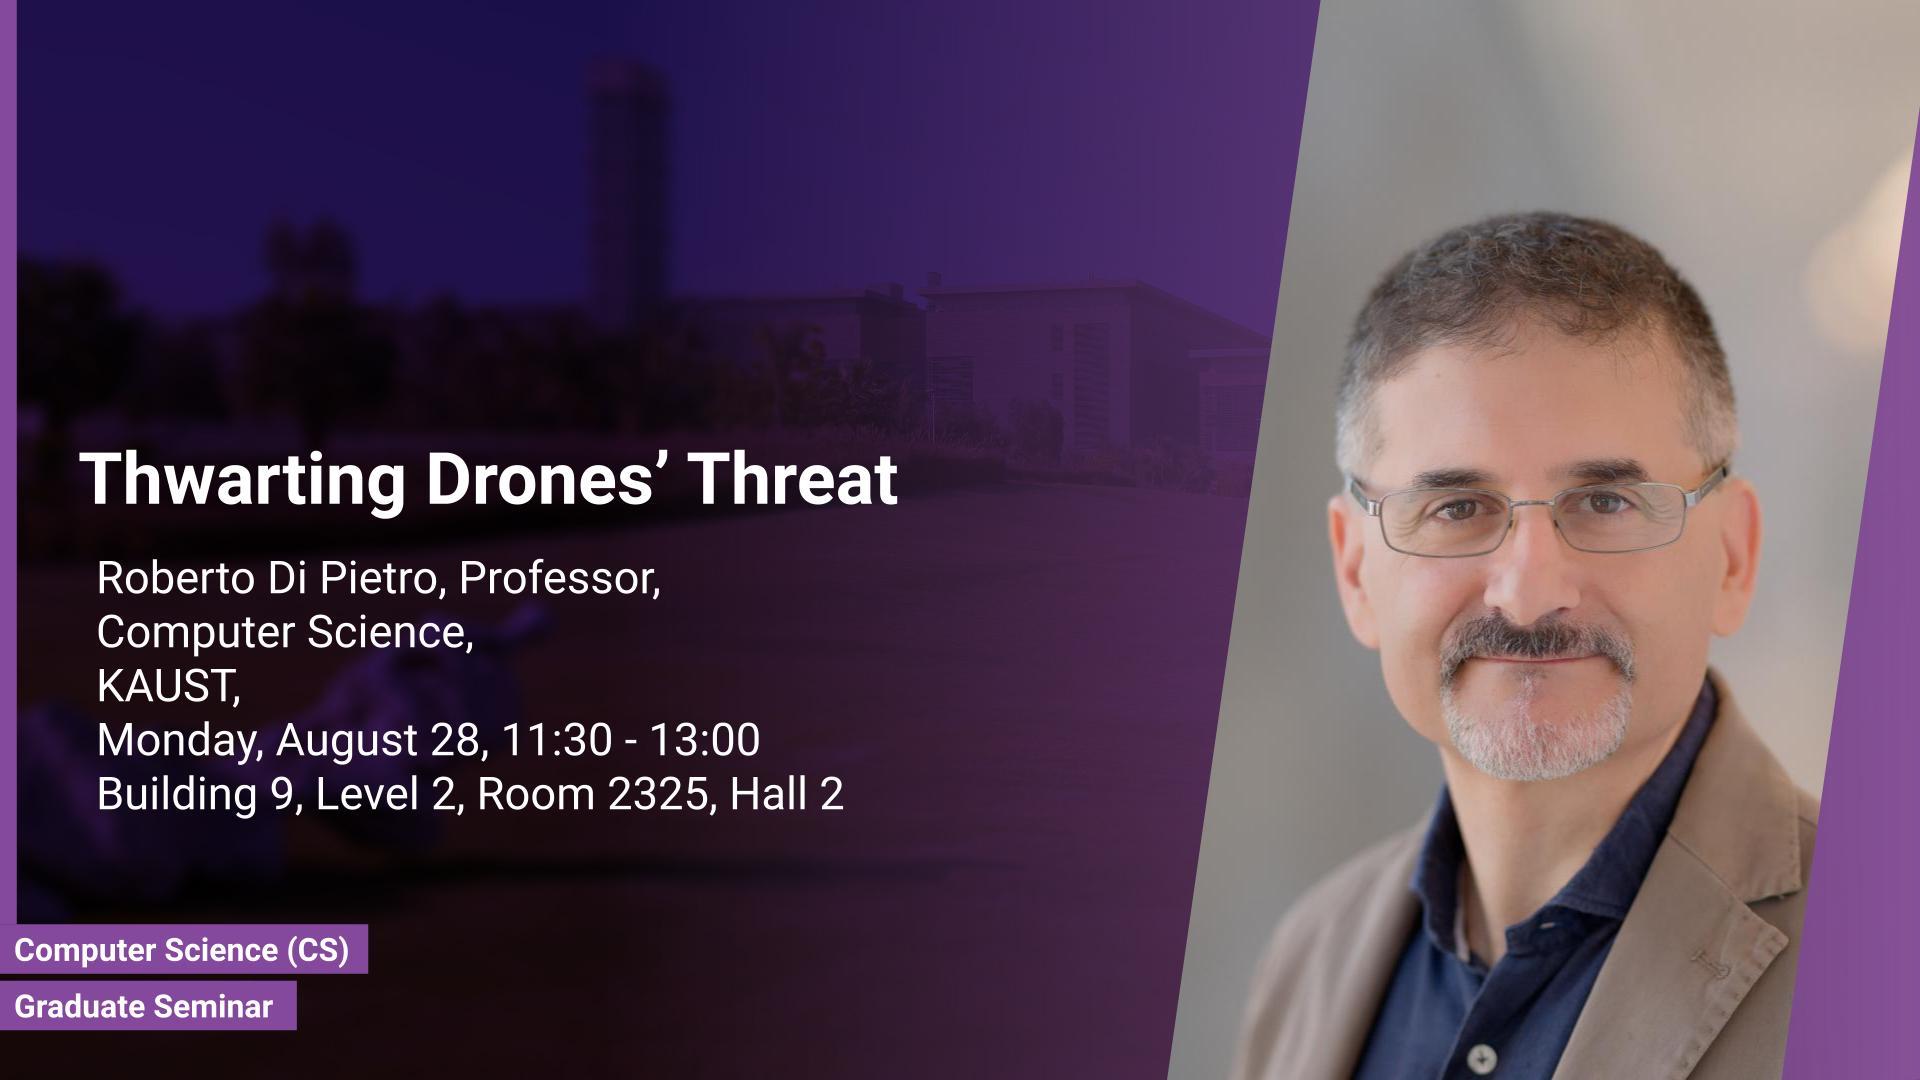 KAUST-CEMSE-CS-Graduate-Seminar-Roberto-Di-Pietro-Thwarting-Drones-Threat.jpg